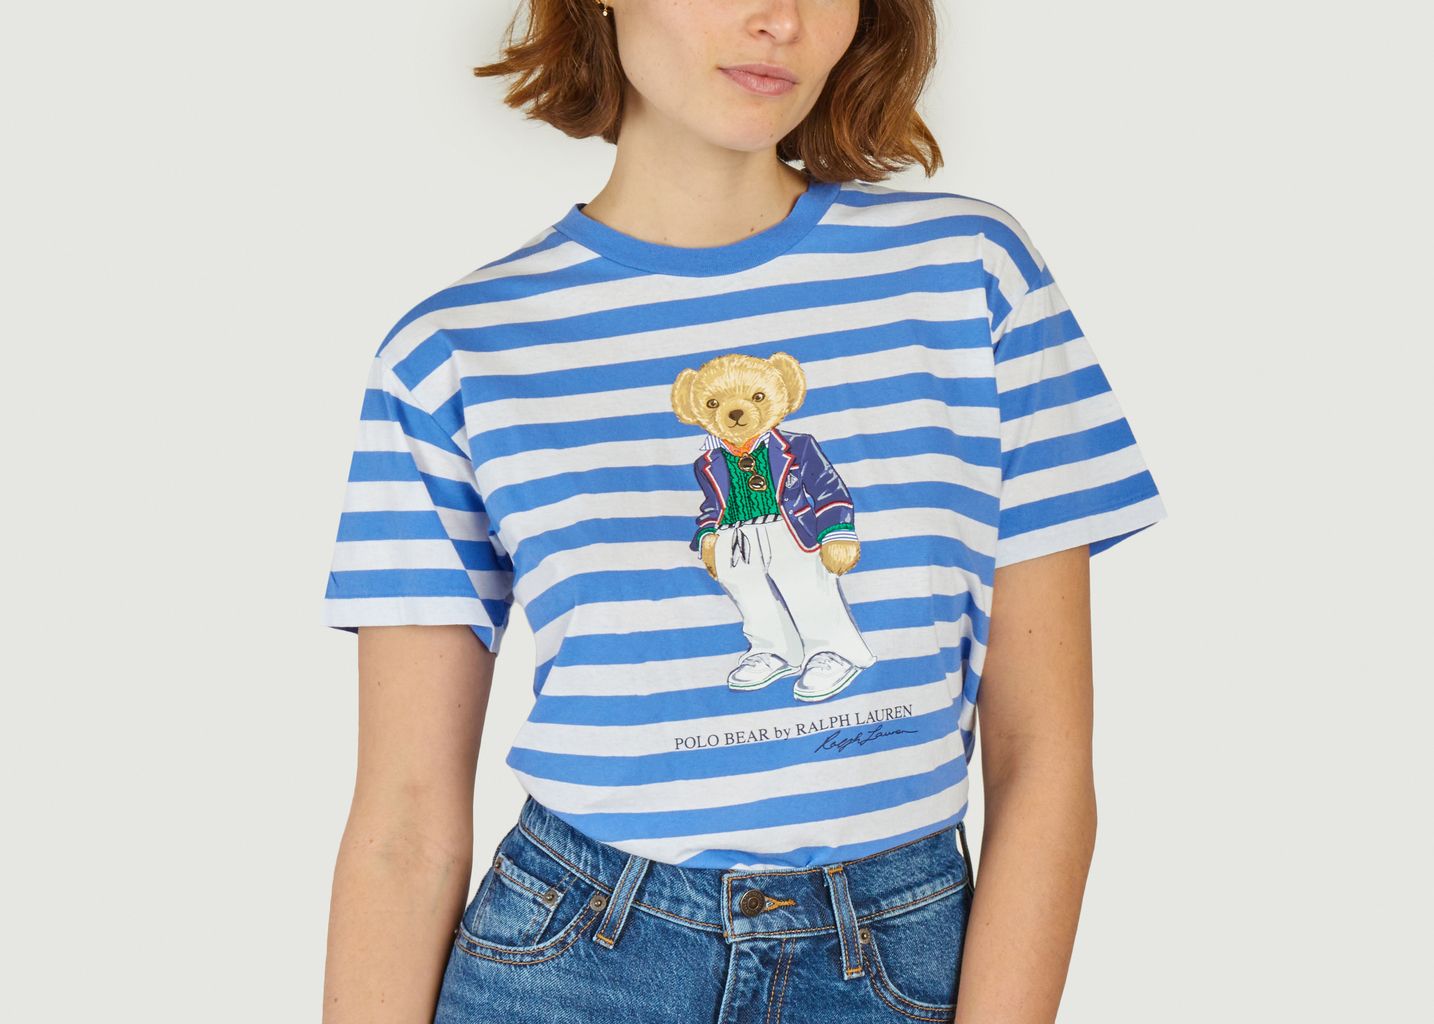 Polo Bear T-shirt - Polo Ralph Lauren